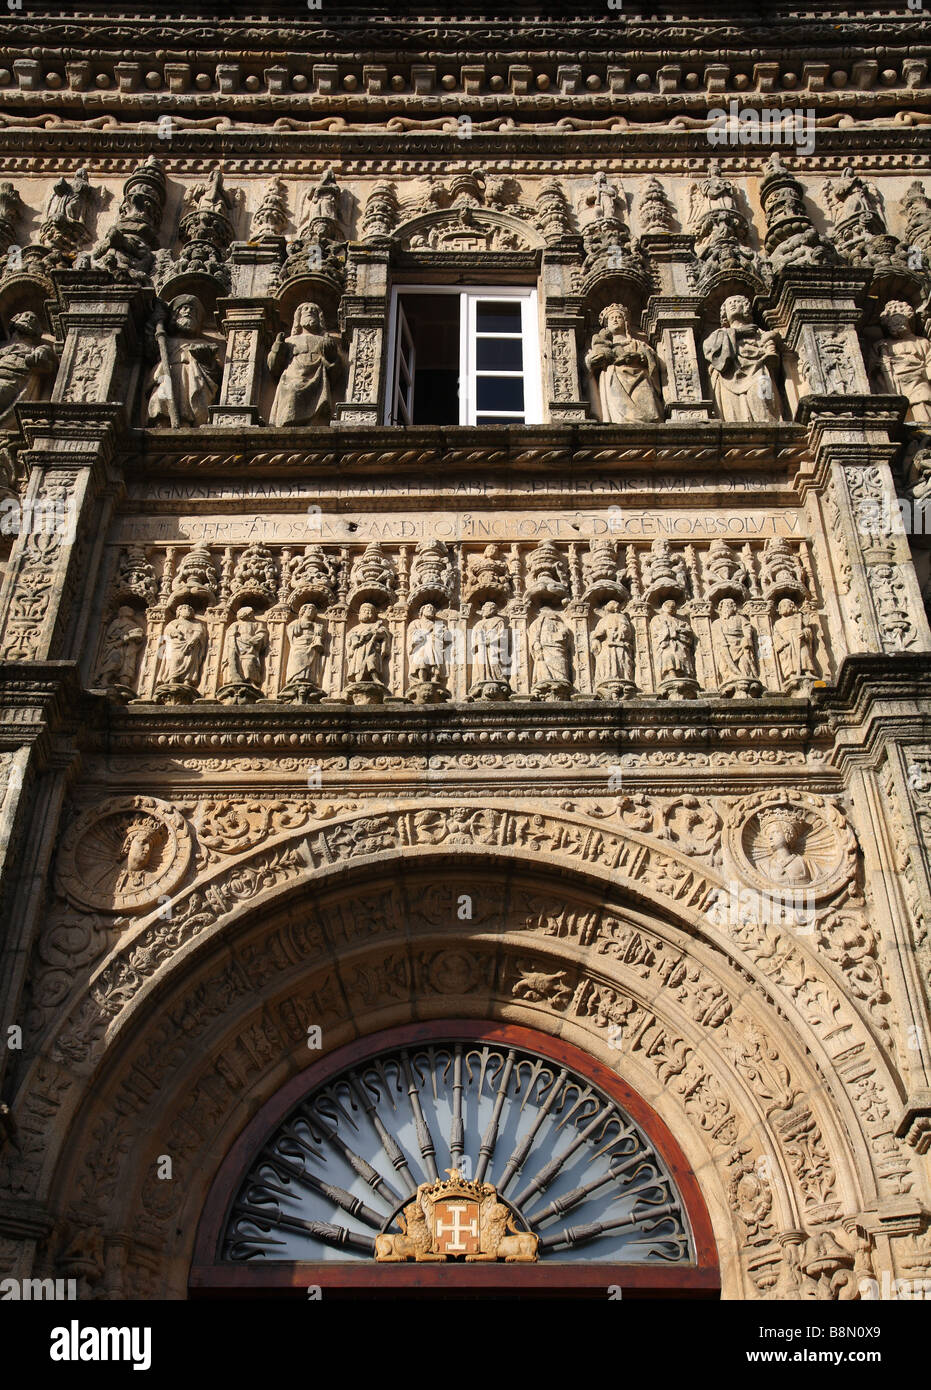 Hostal de Los reyes Catolicos Santaigo de Compostela Spanien Stockfoto